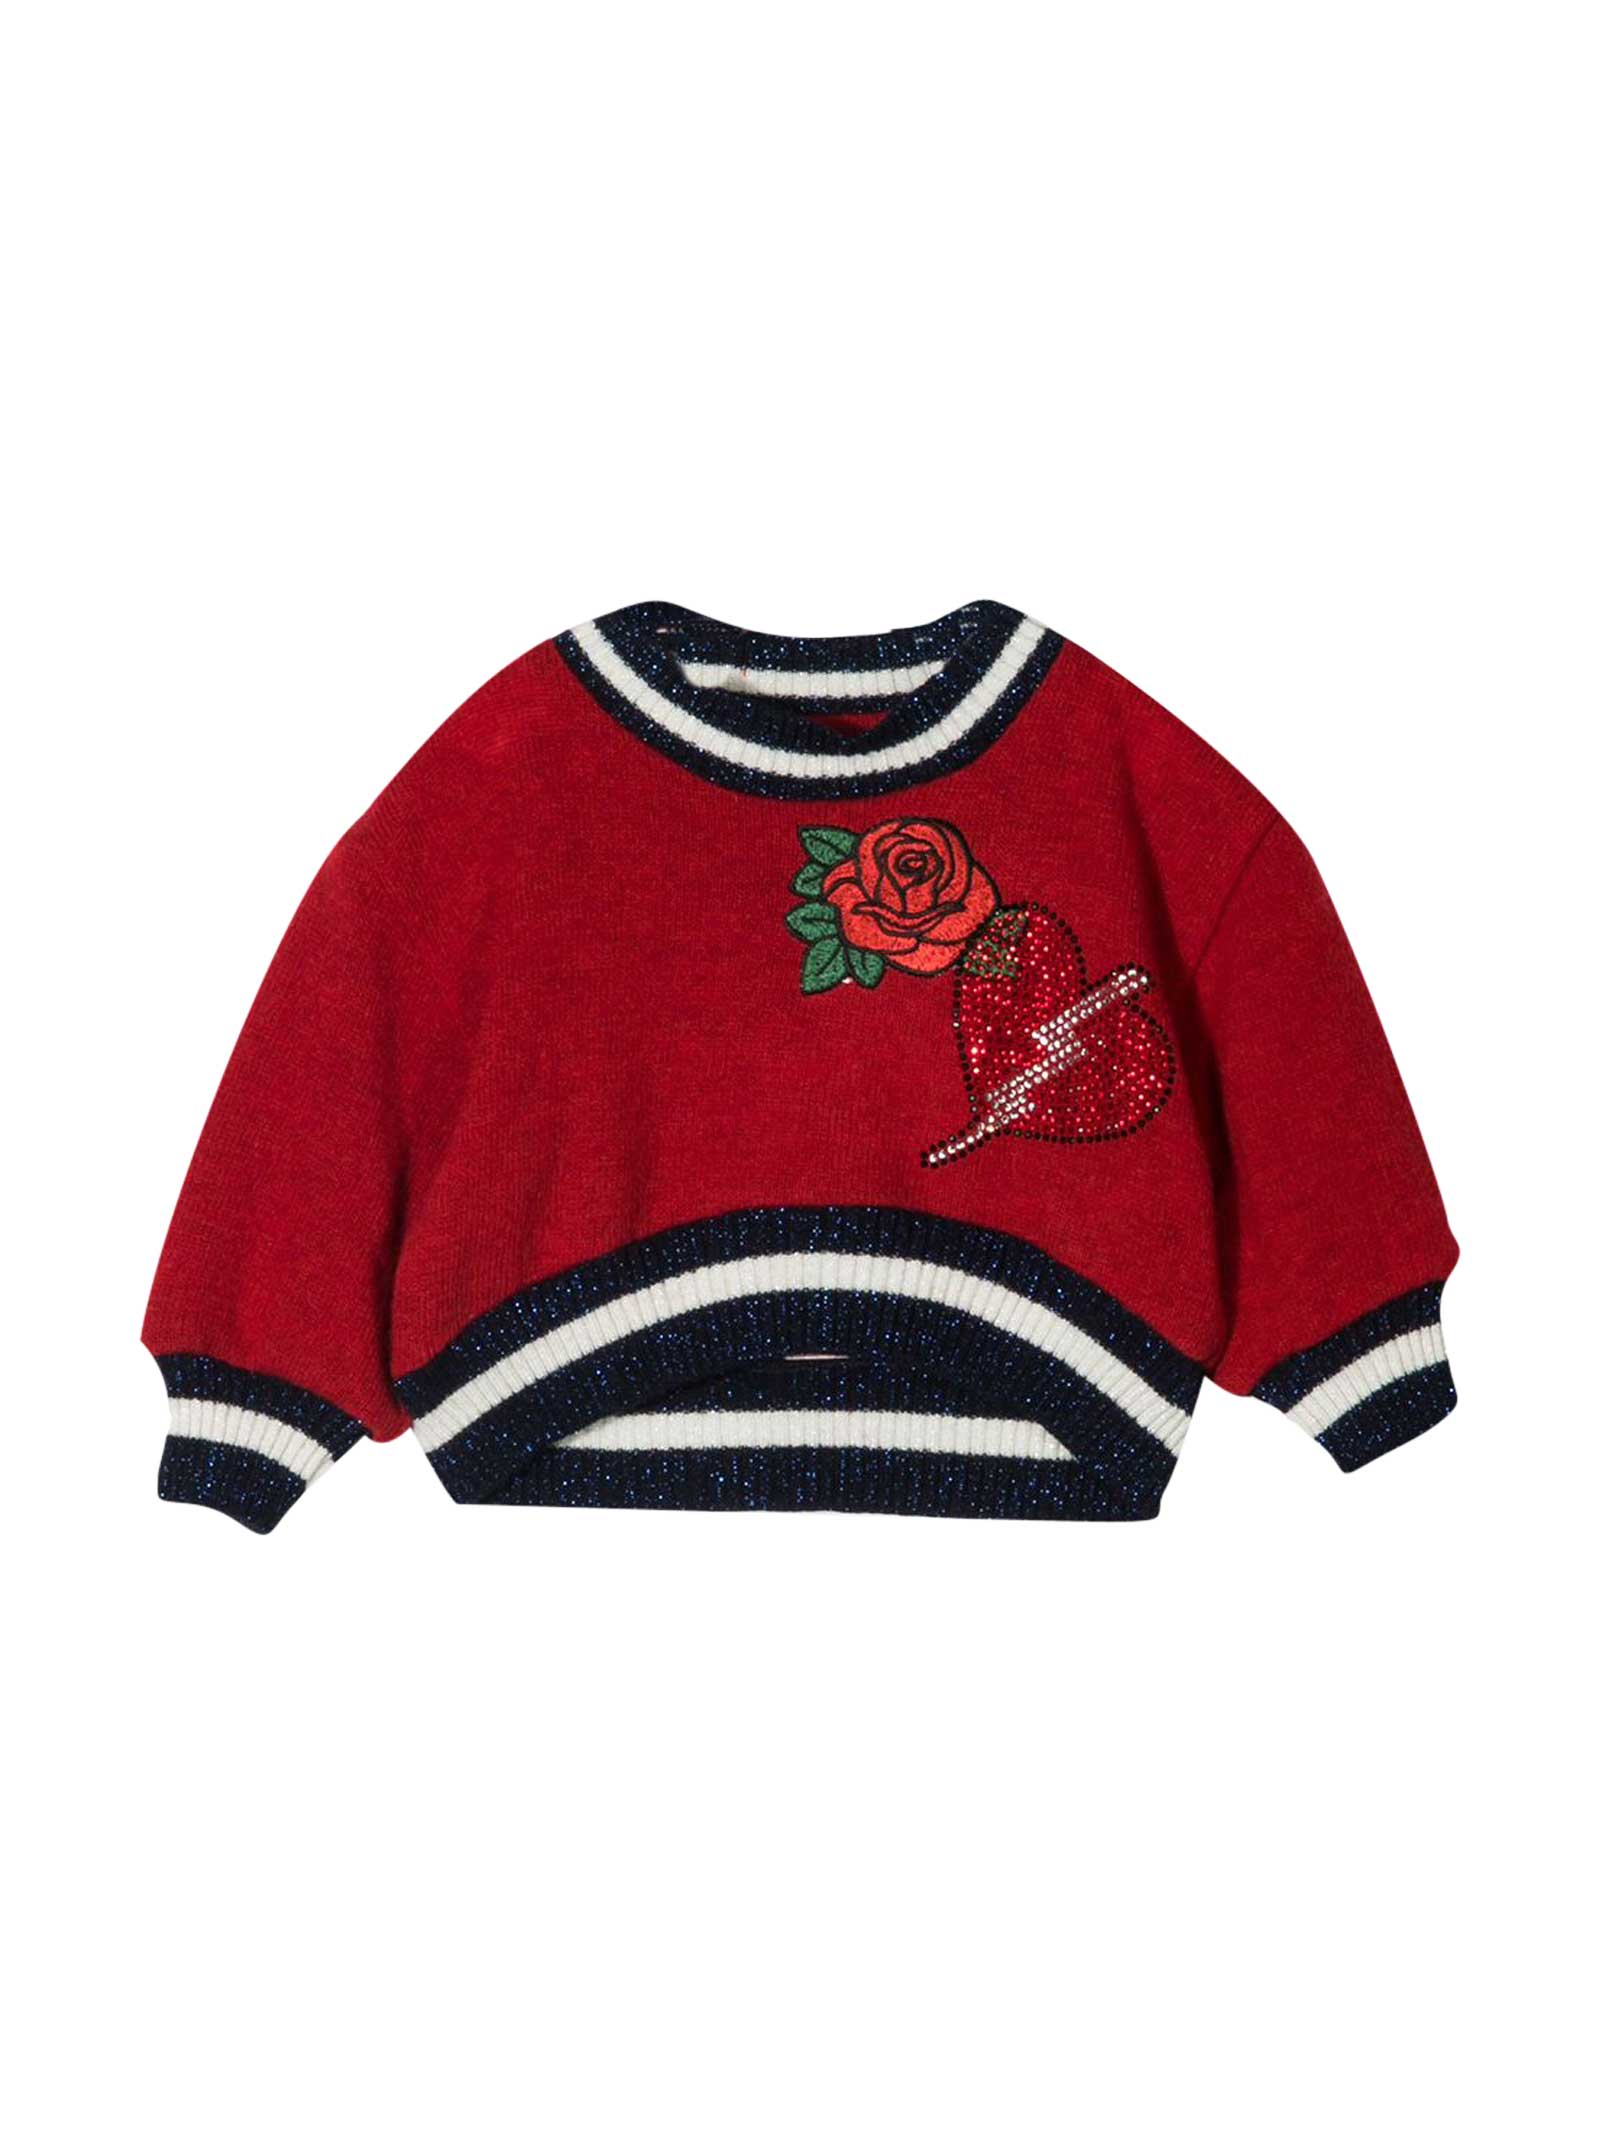 Miss Blumarine Short Red Sweatshirt